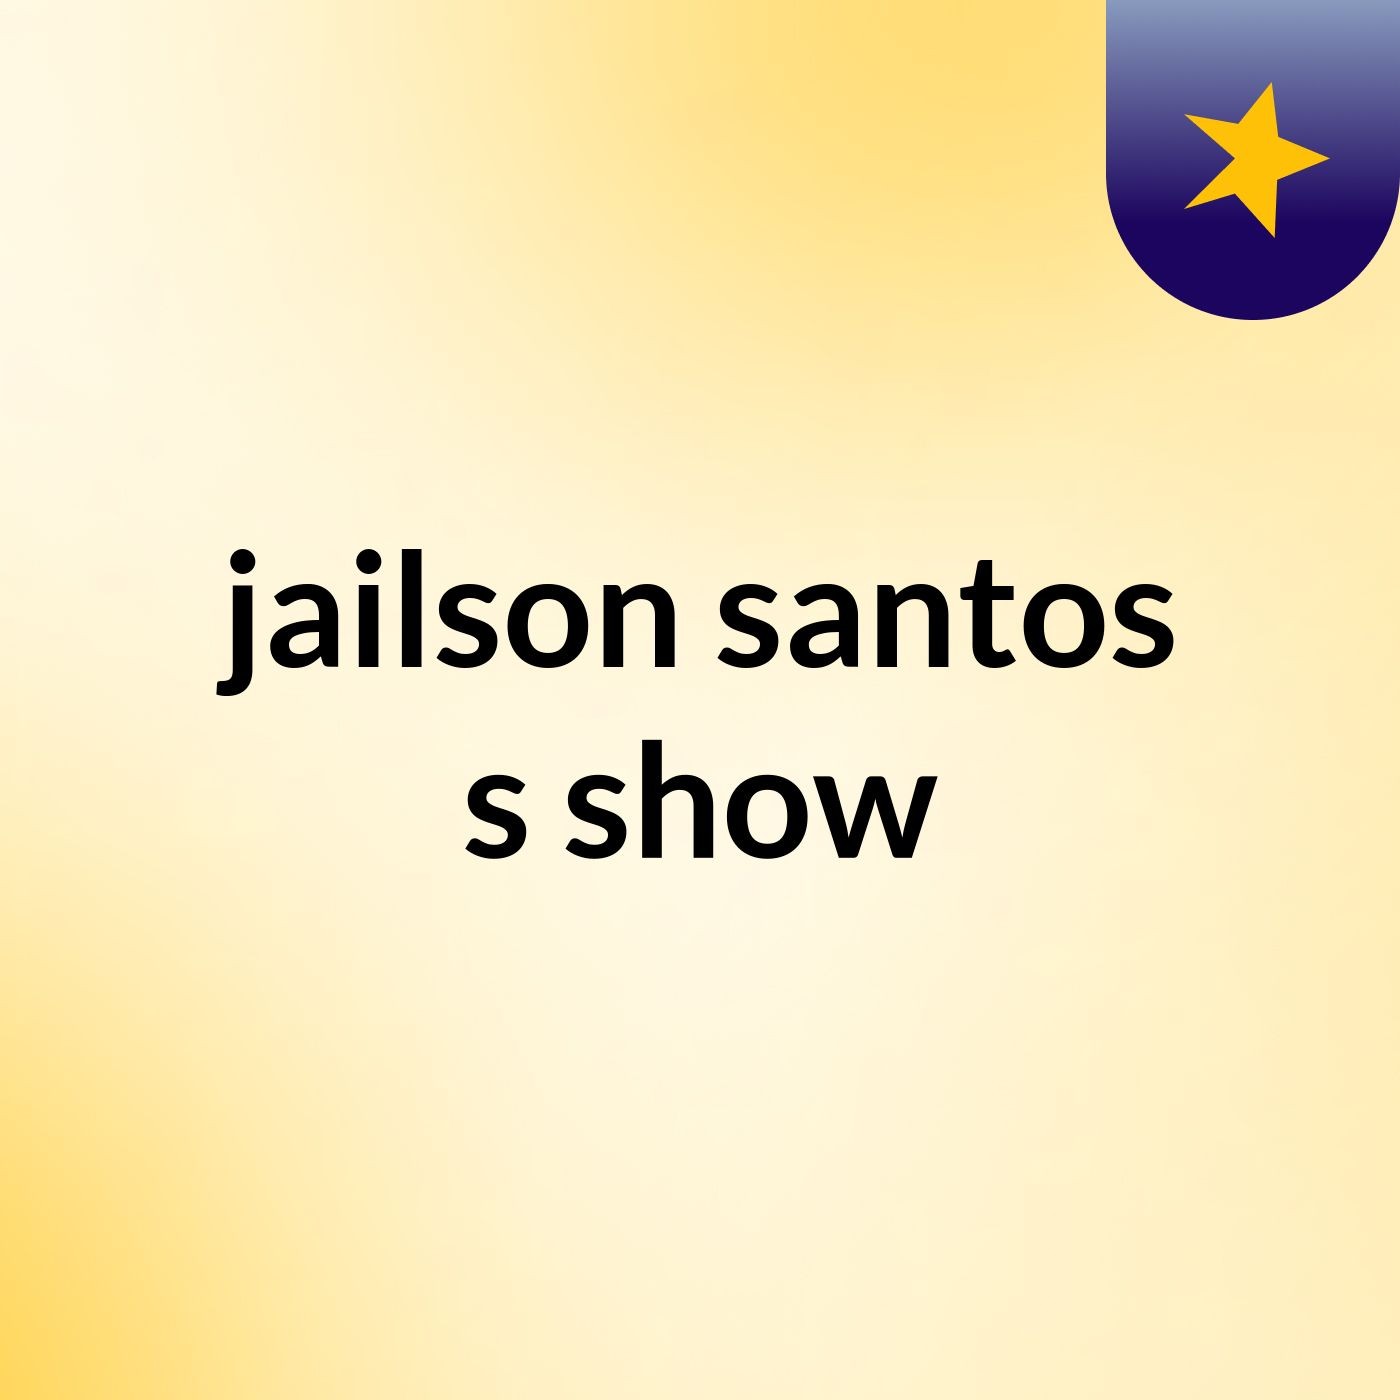 jailson santos's show